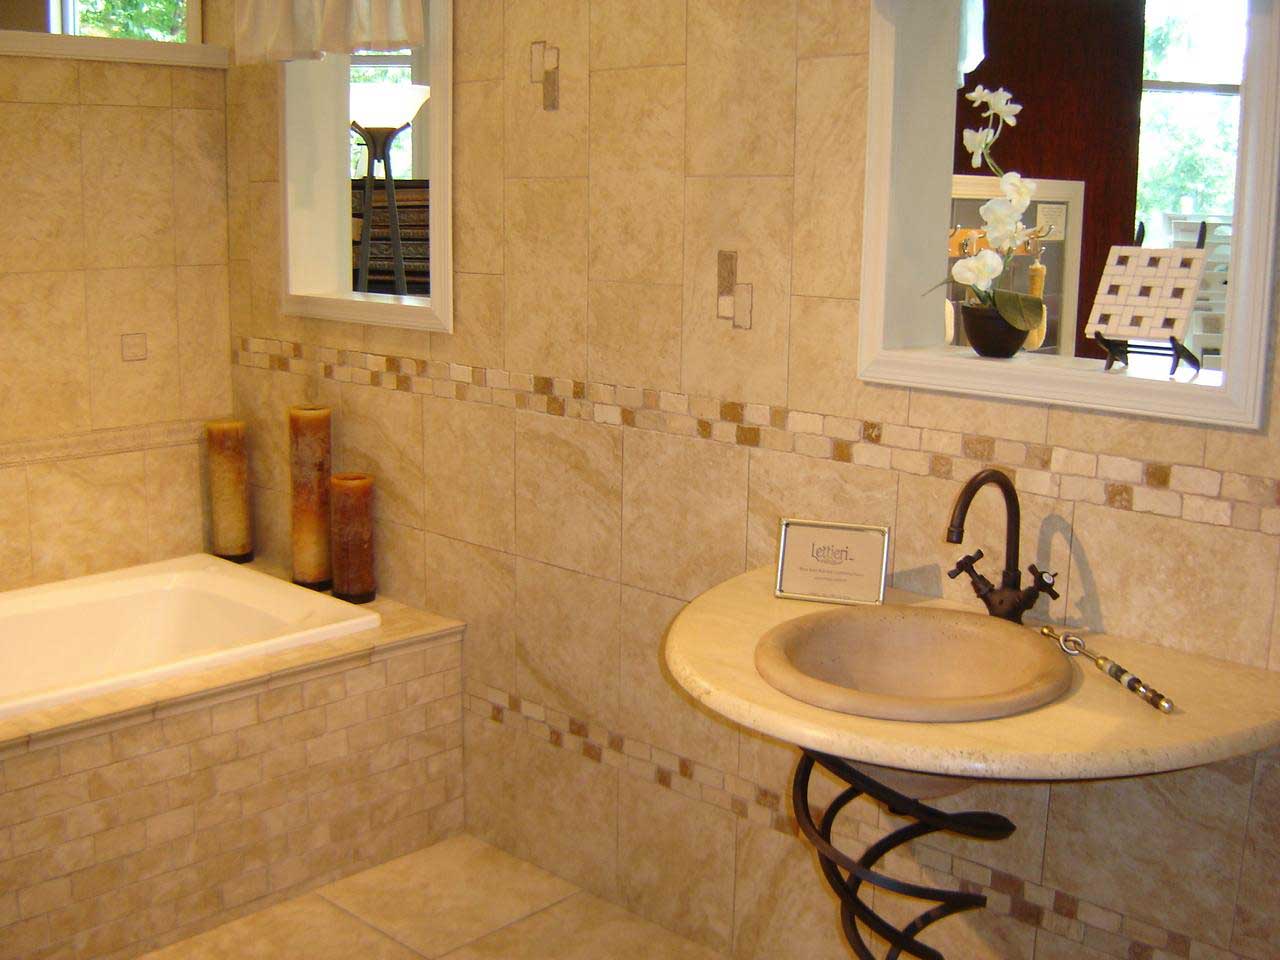 Bathroom Tile Modern Appealing Bathroom Tile Ideas With Modern Spacious Interior Bathroom Design Also Natural Color Tile Bathroom Idea With Unique Sink Bathroom Design Ideas Bathroom The Reasons Why Choosing Bathroom Tile Ideas